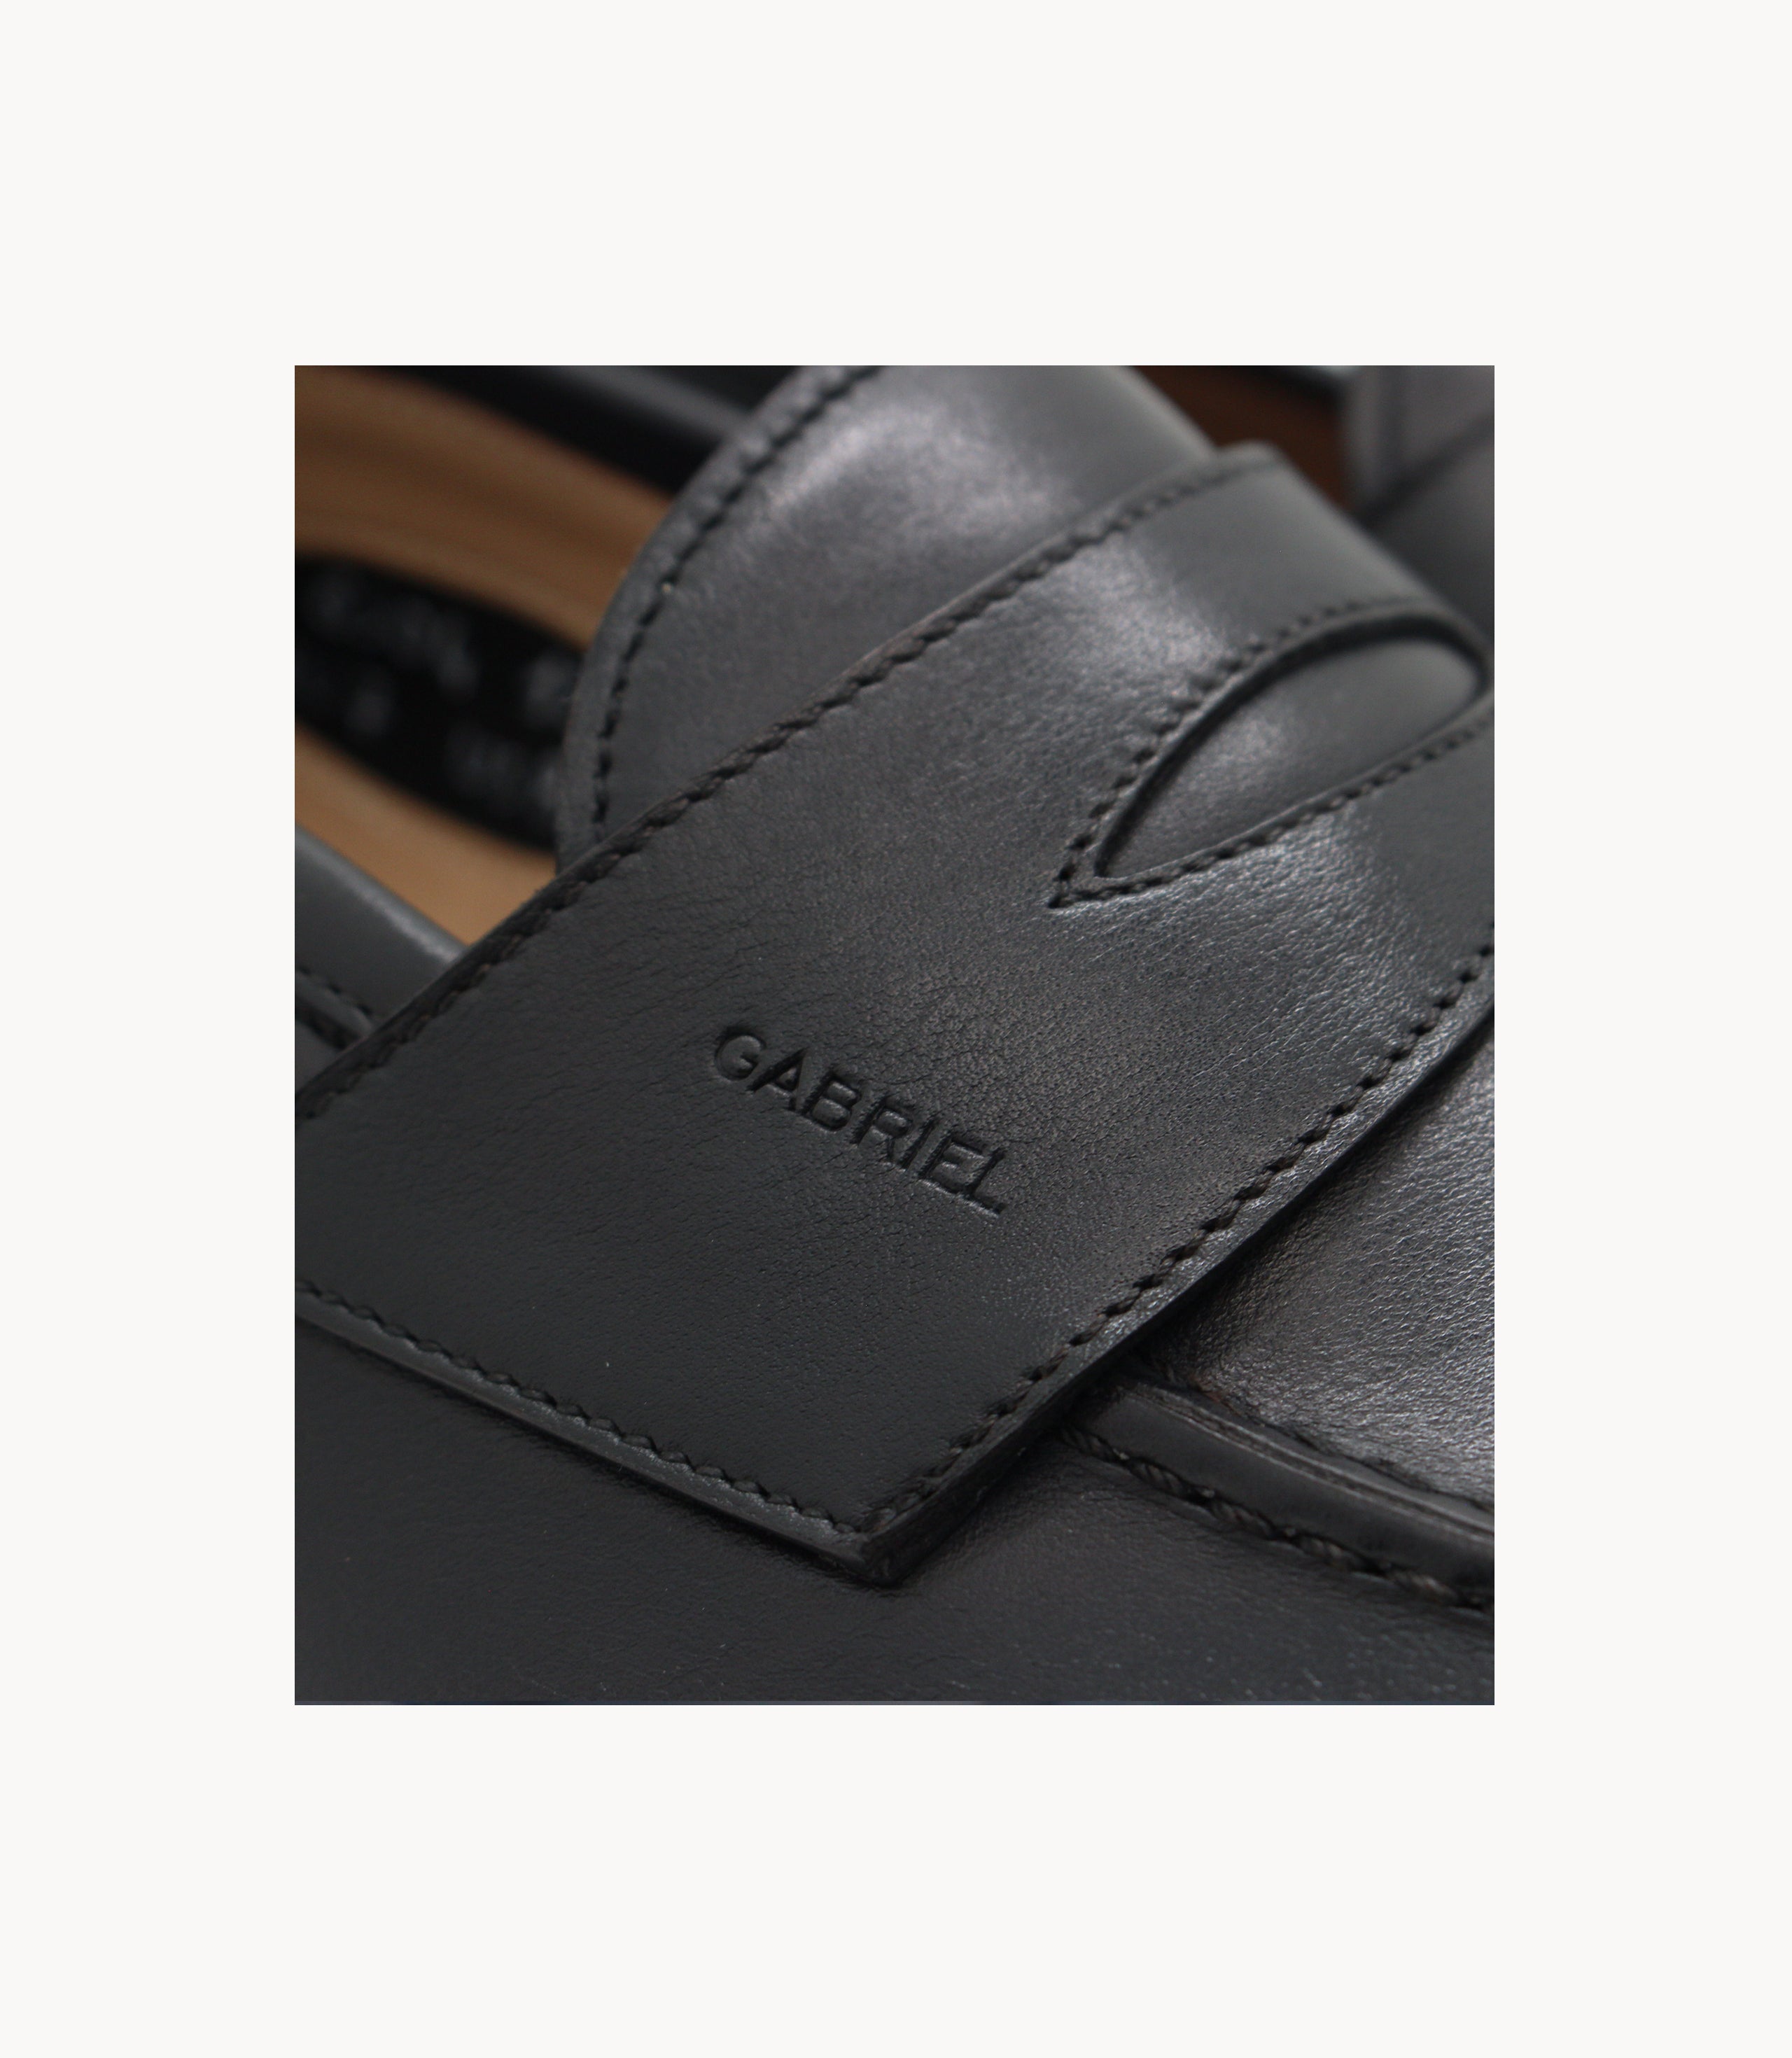 VALENTINO BLACK Gabriel Shoes